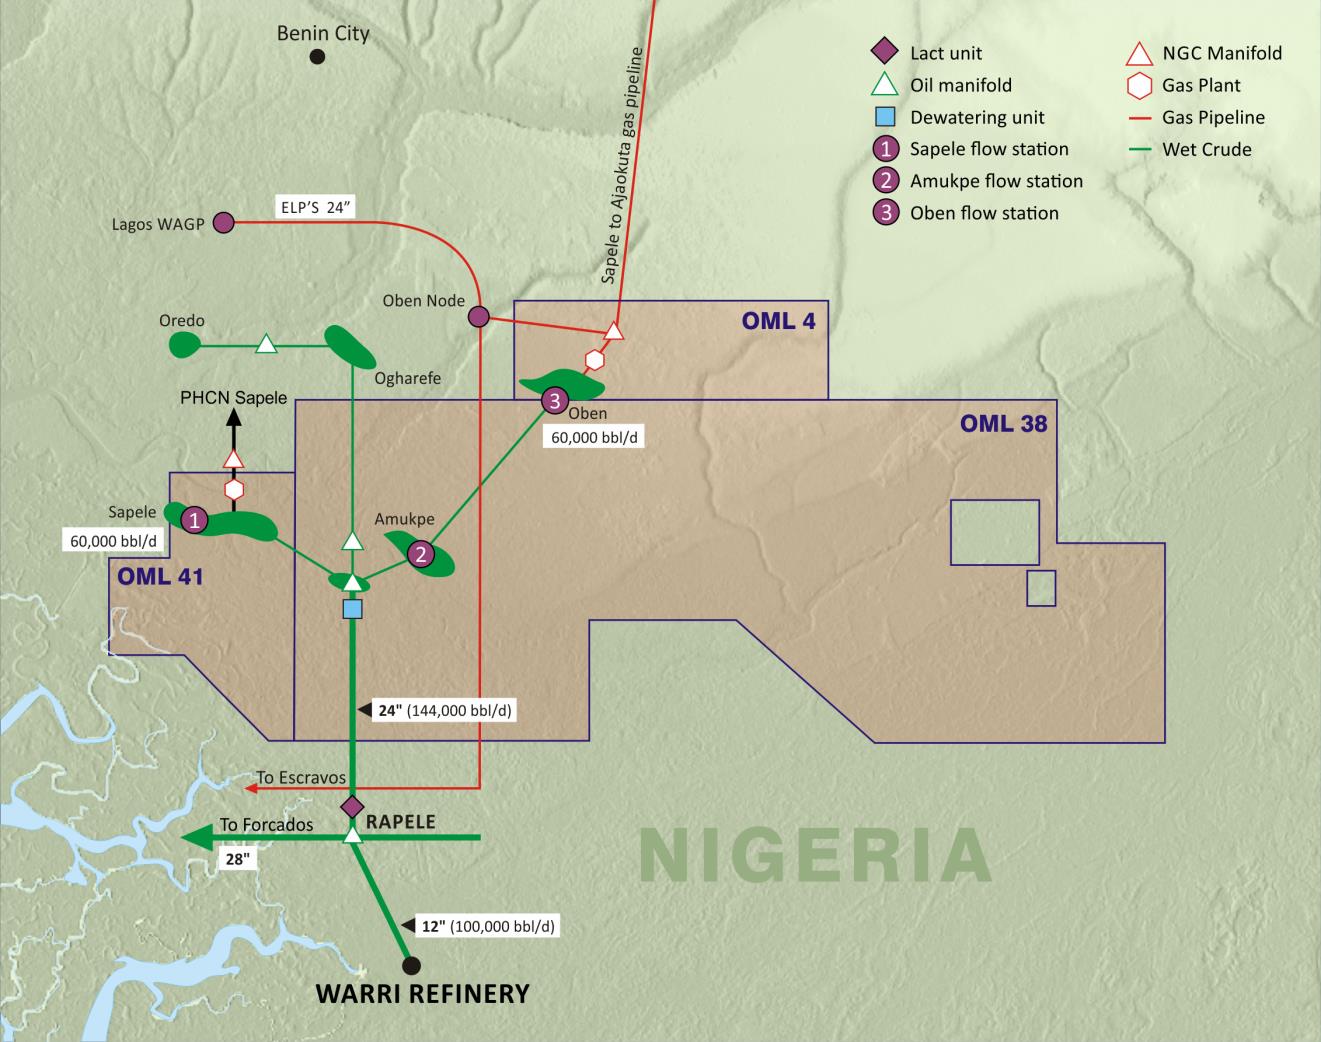 Warri refinery pipeline and liquid treatment facility Seplat-operated 12 x 7km